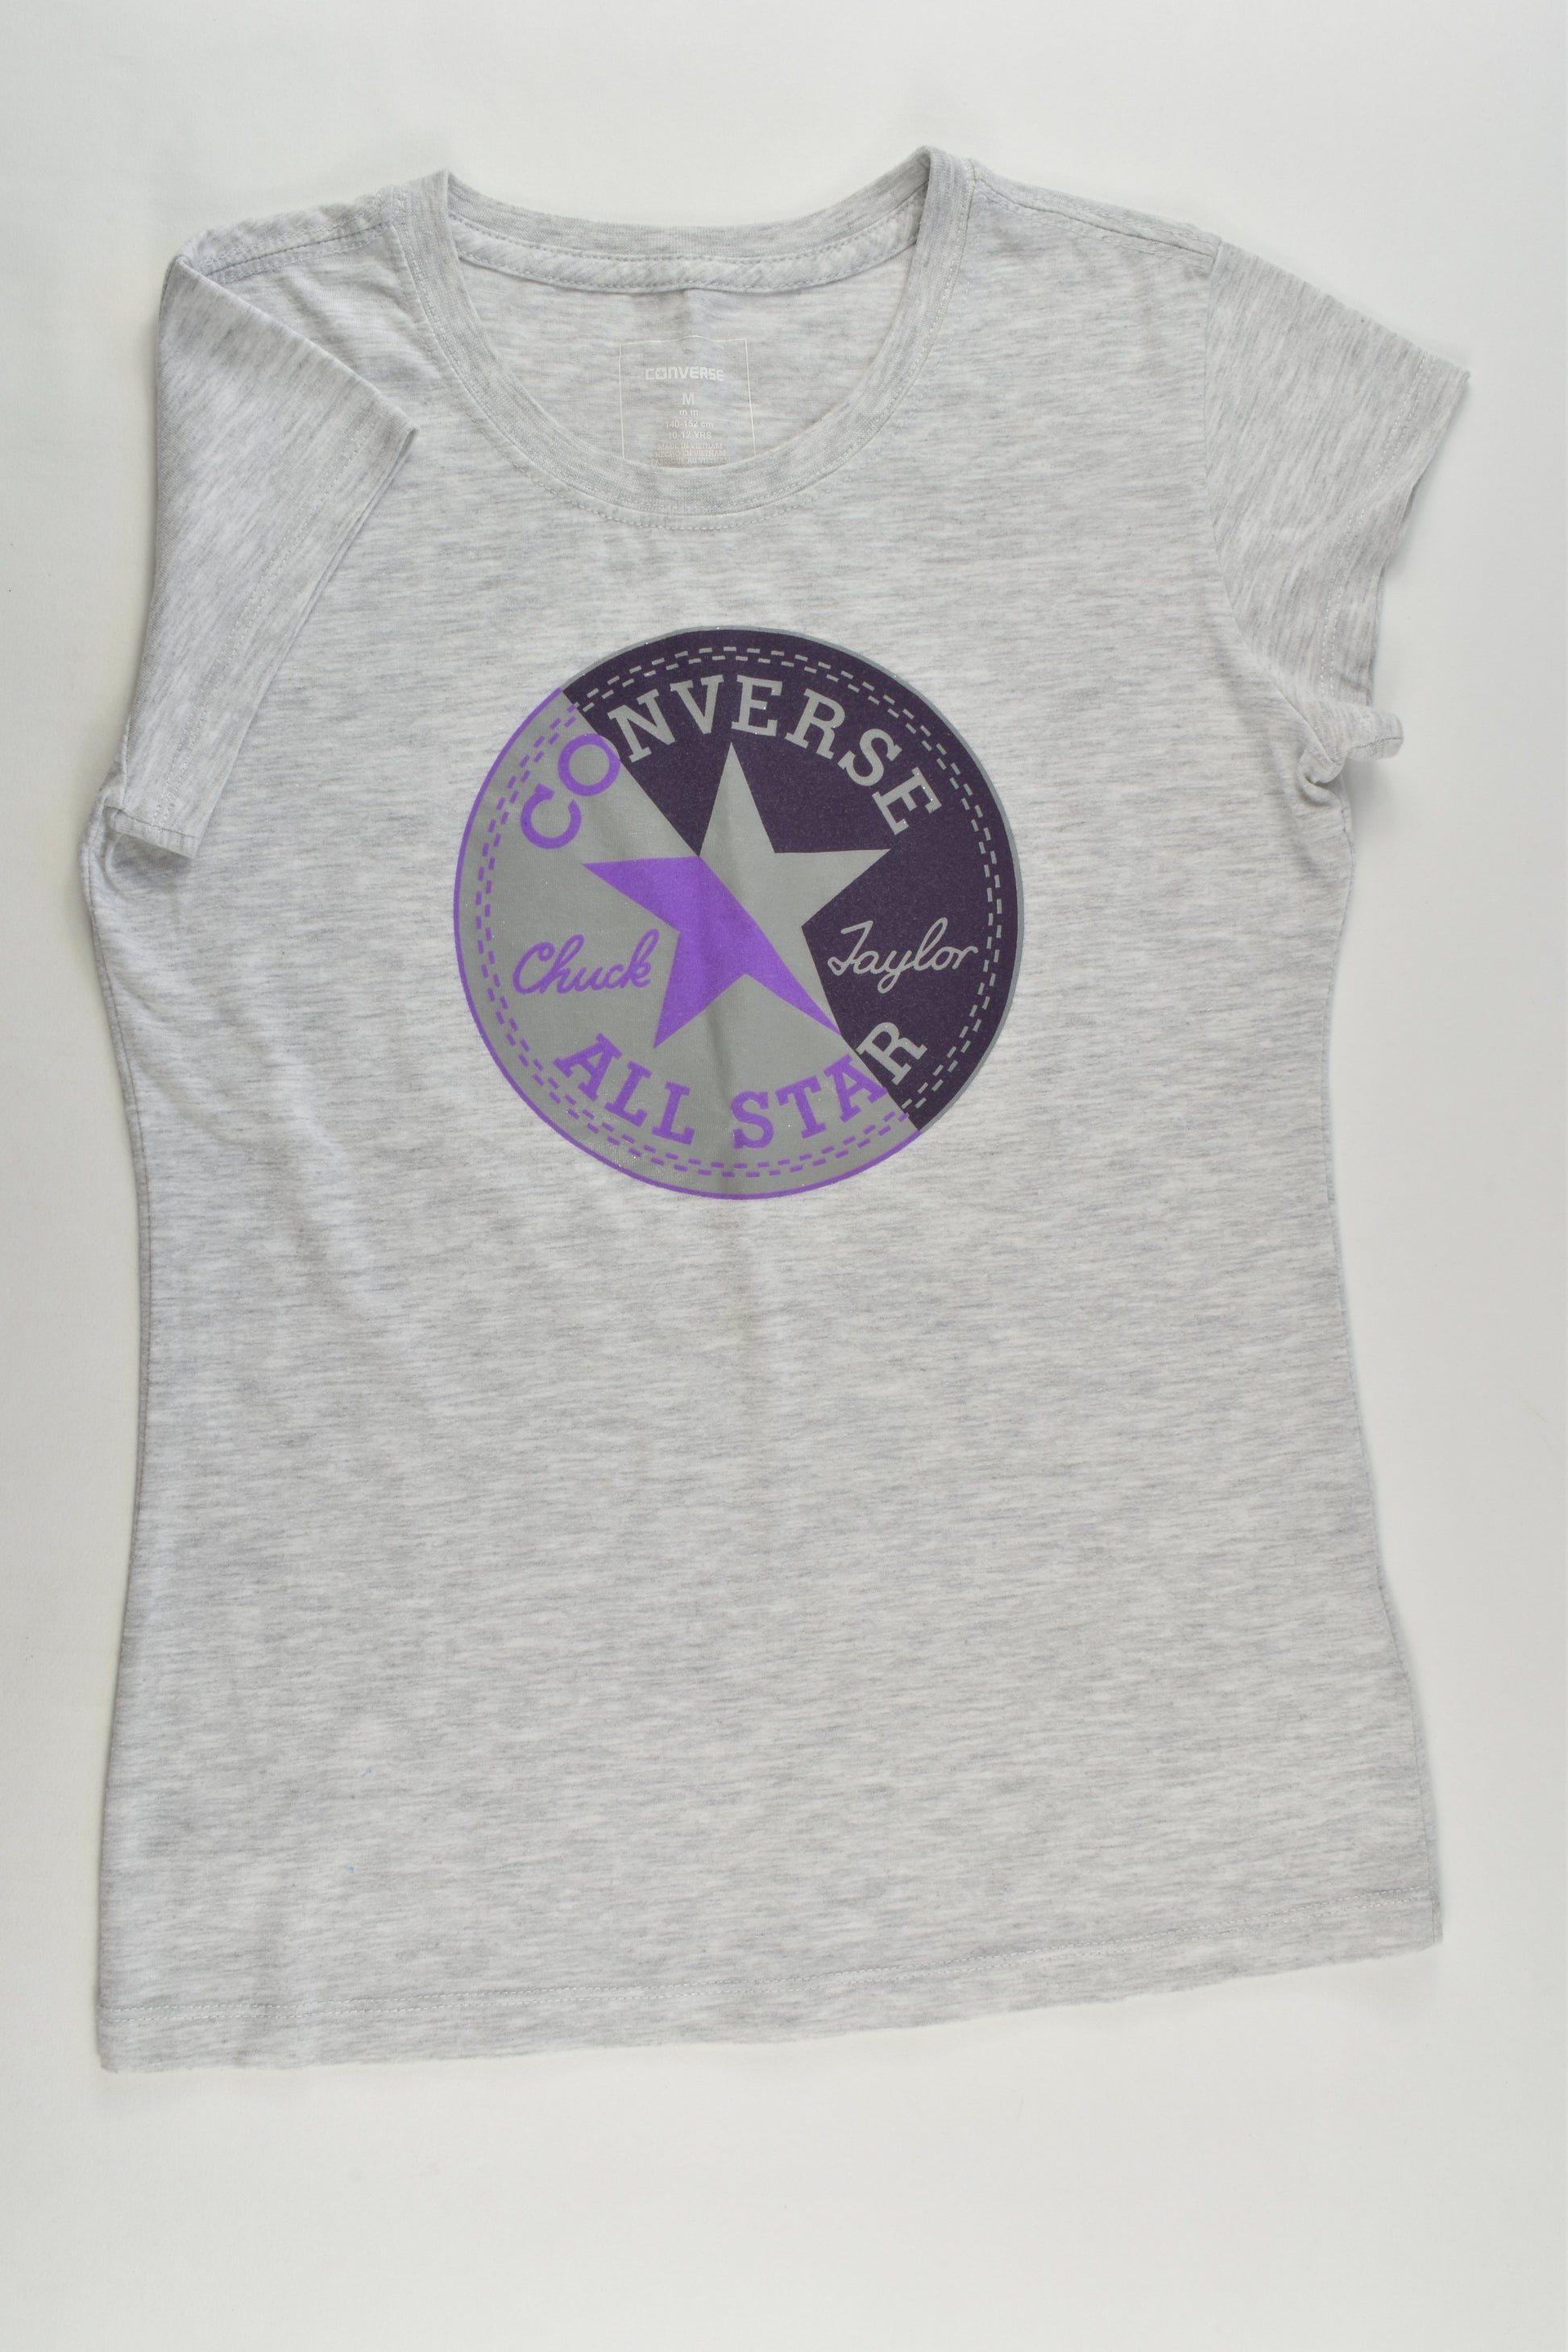 Converse Size 10-12 T-shirt